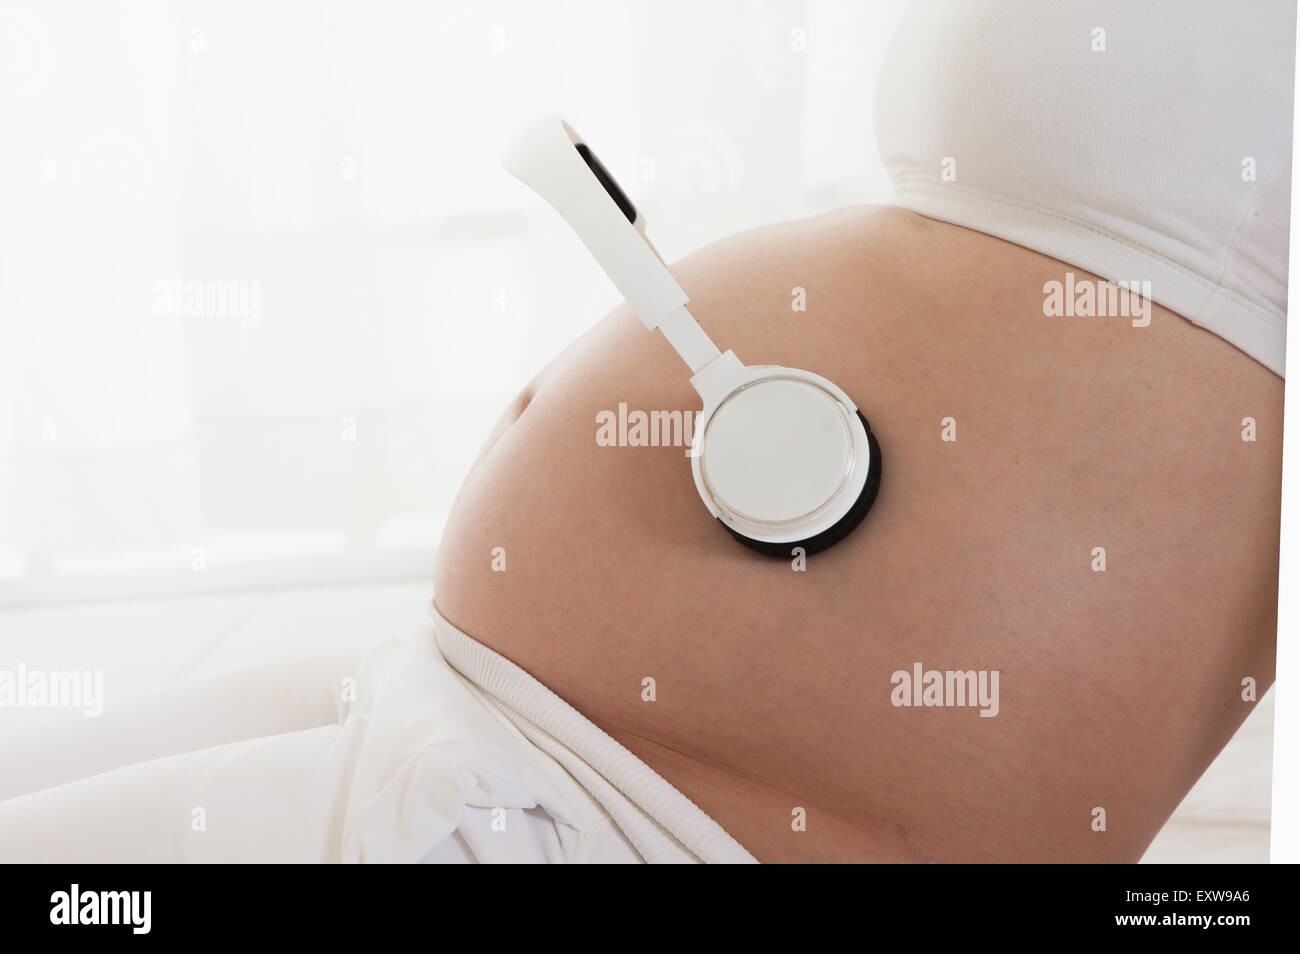 Pregnant woman holding head phones on the abdomen, Stock Photo